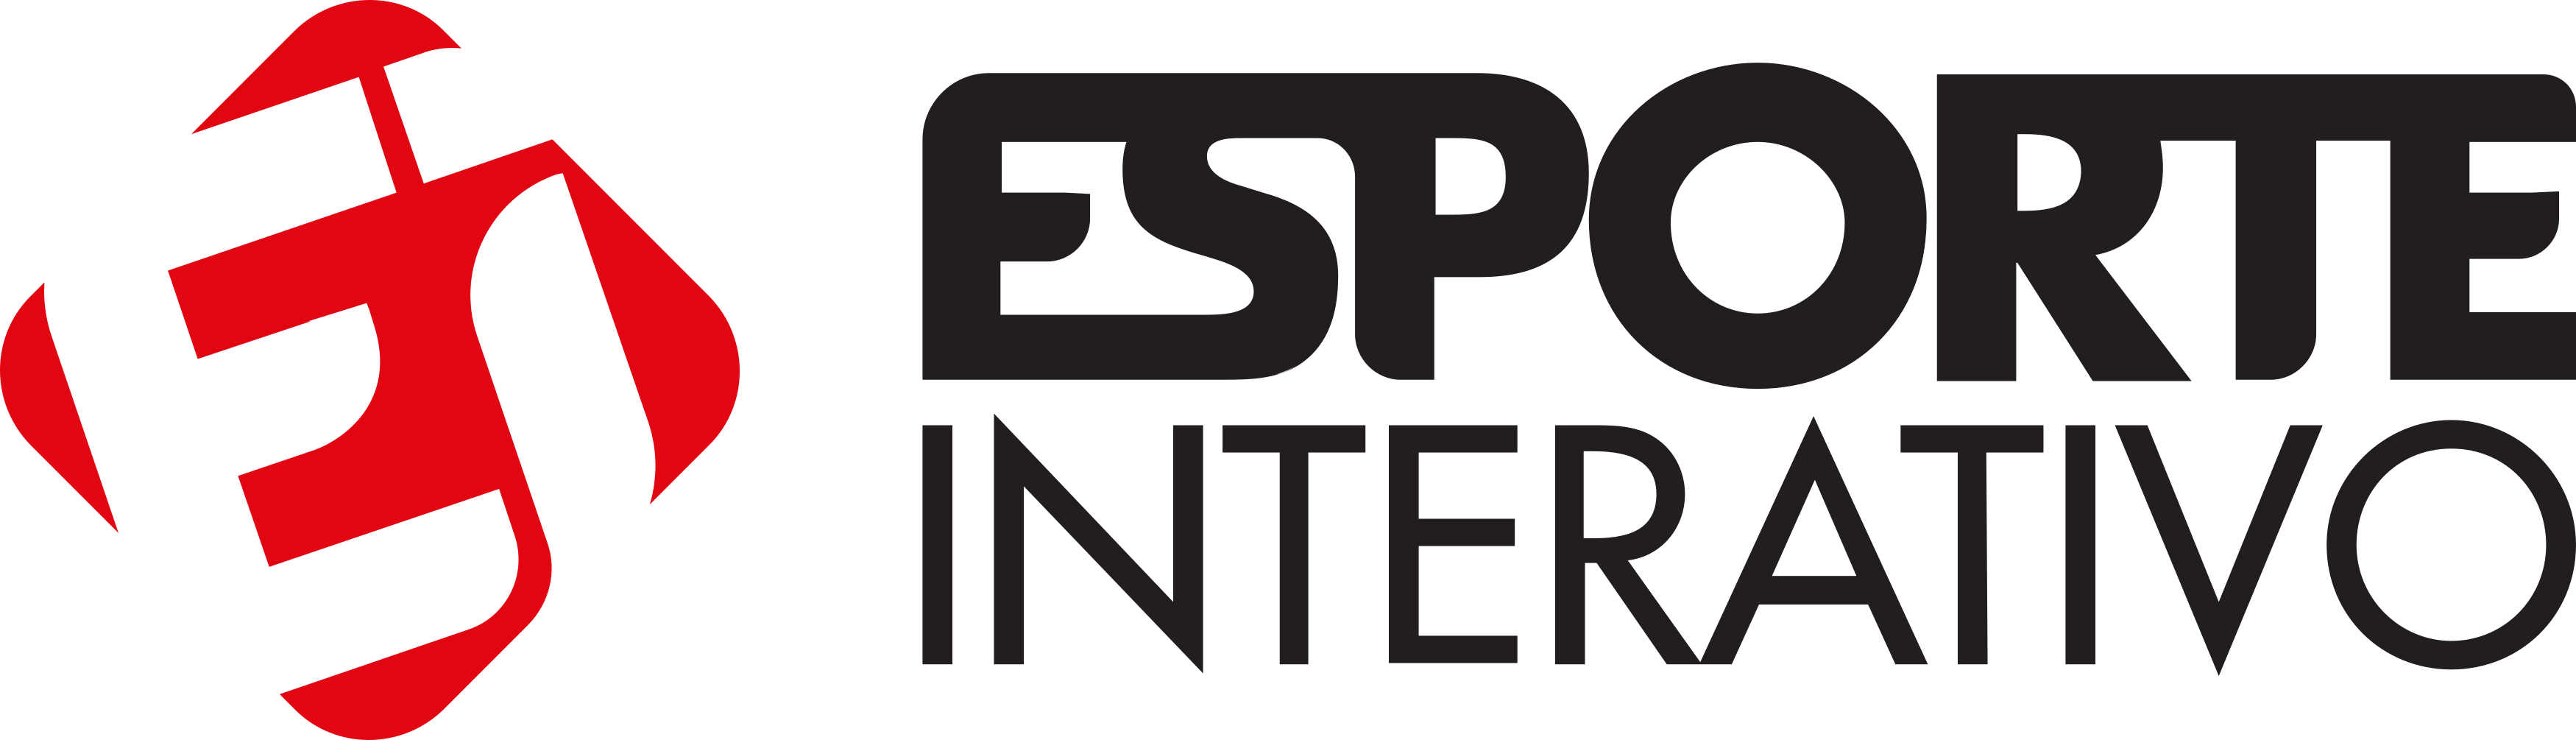 Esporte Interativo Logo.